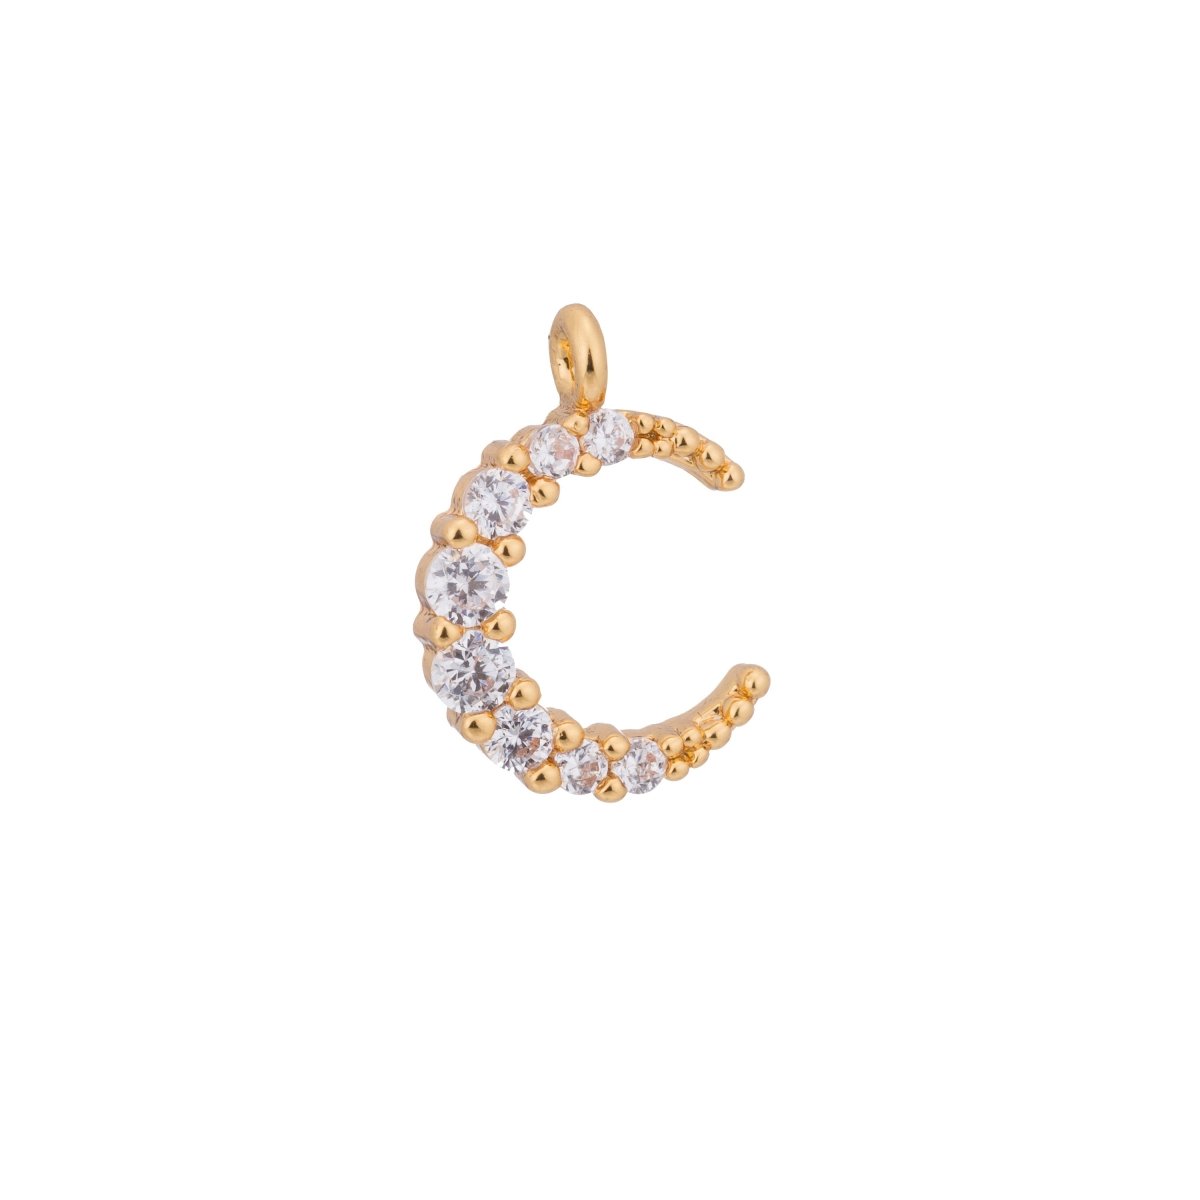 Gold Moon Beam, Moonlight, Crescent, Wish, Dream Celestial Craft Cubic Zirconia Bracelet Charm Bead Findings Pendant For Jewelry Making, CHGF-202/C-177 - DLUXCA